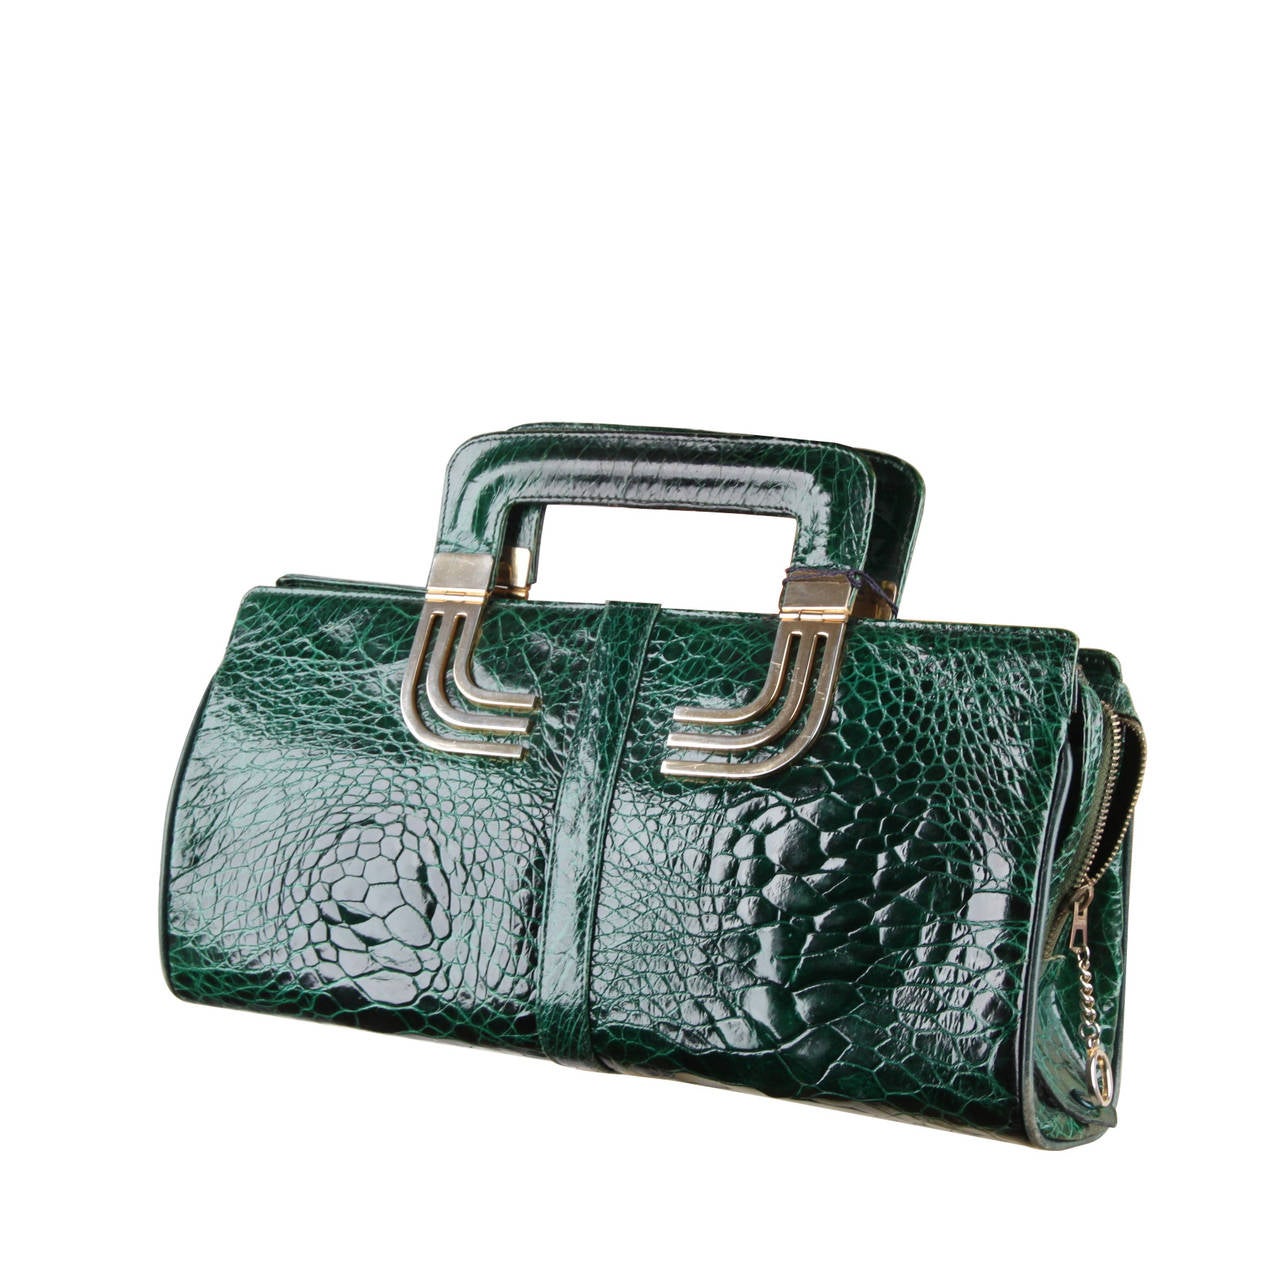 VINTAGE Italian Green Leather TOTE HANDBAG w/ Matching Wallet